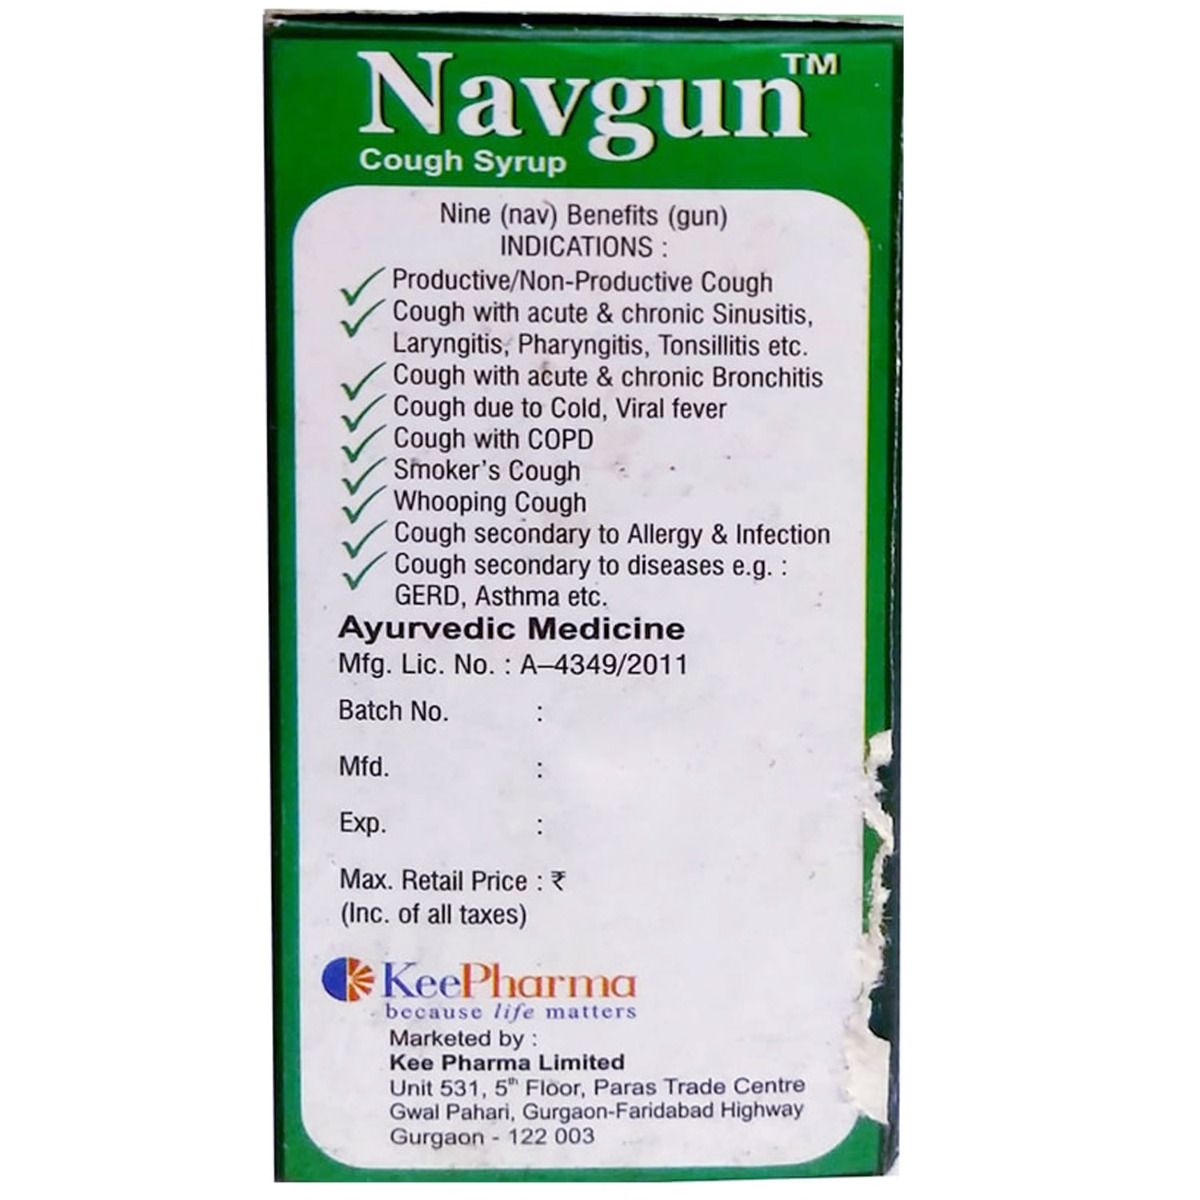 Navgun Sugar Free Syrup, 100 ml, Pack of 1 